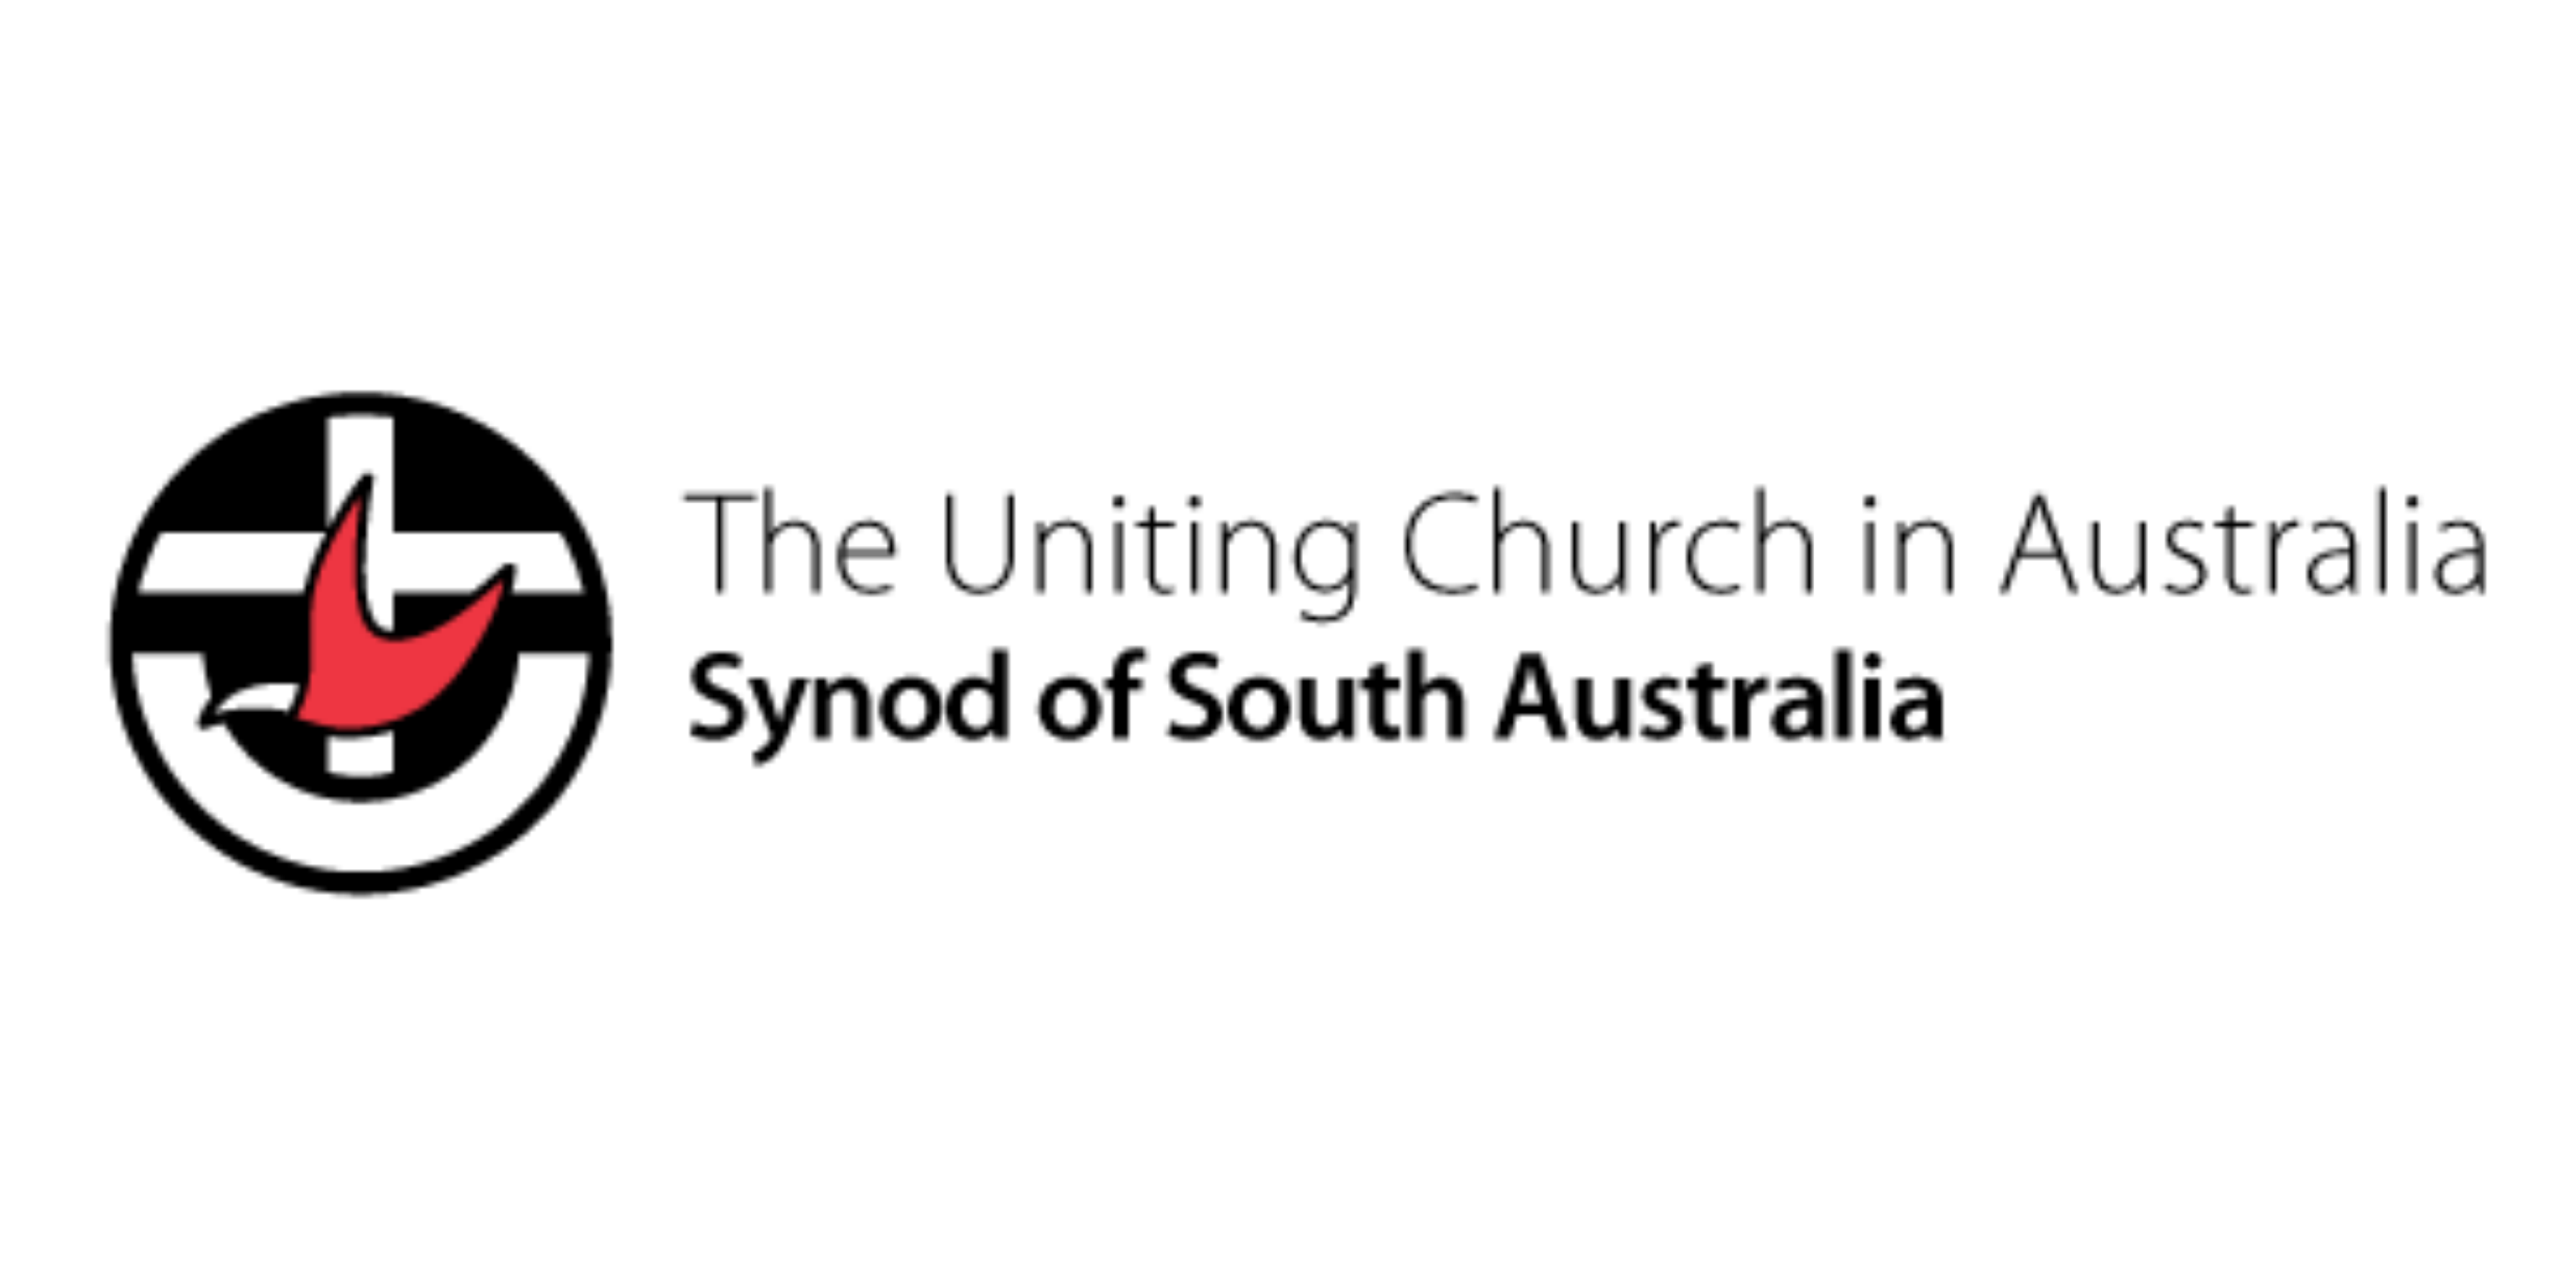 The Uniting Church in Australia - Synod of South Australia